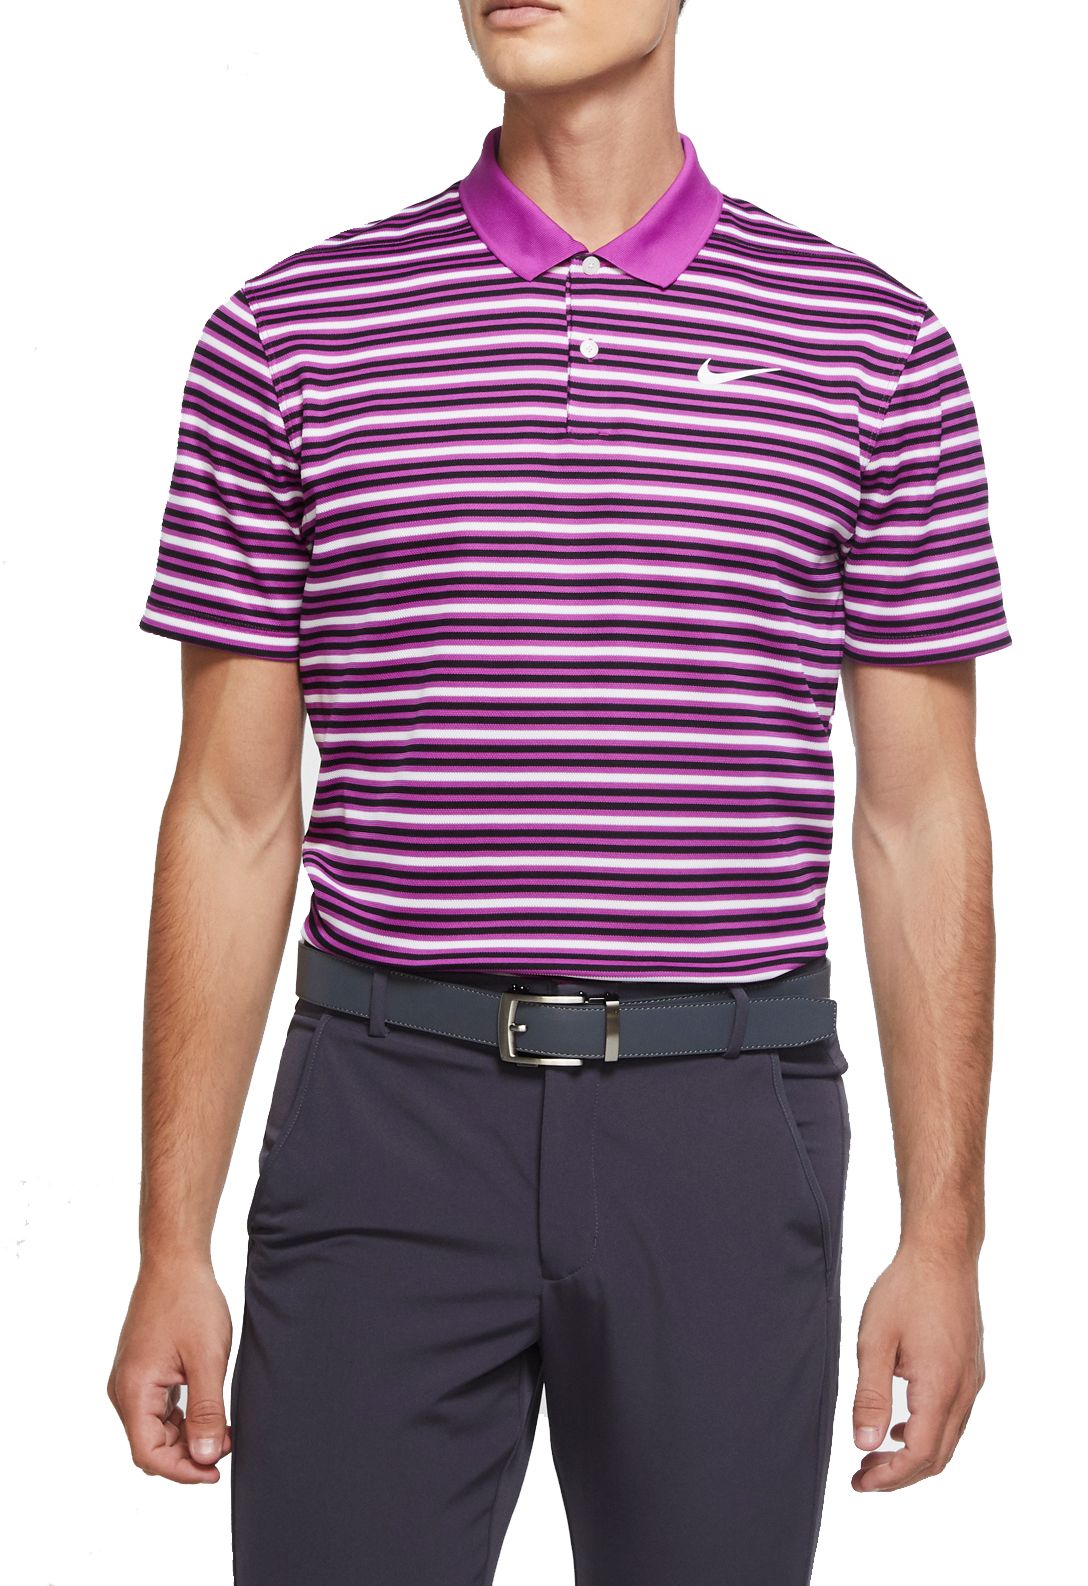 nike striped golf shirt